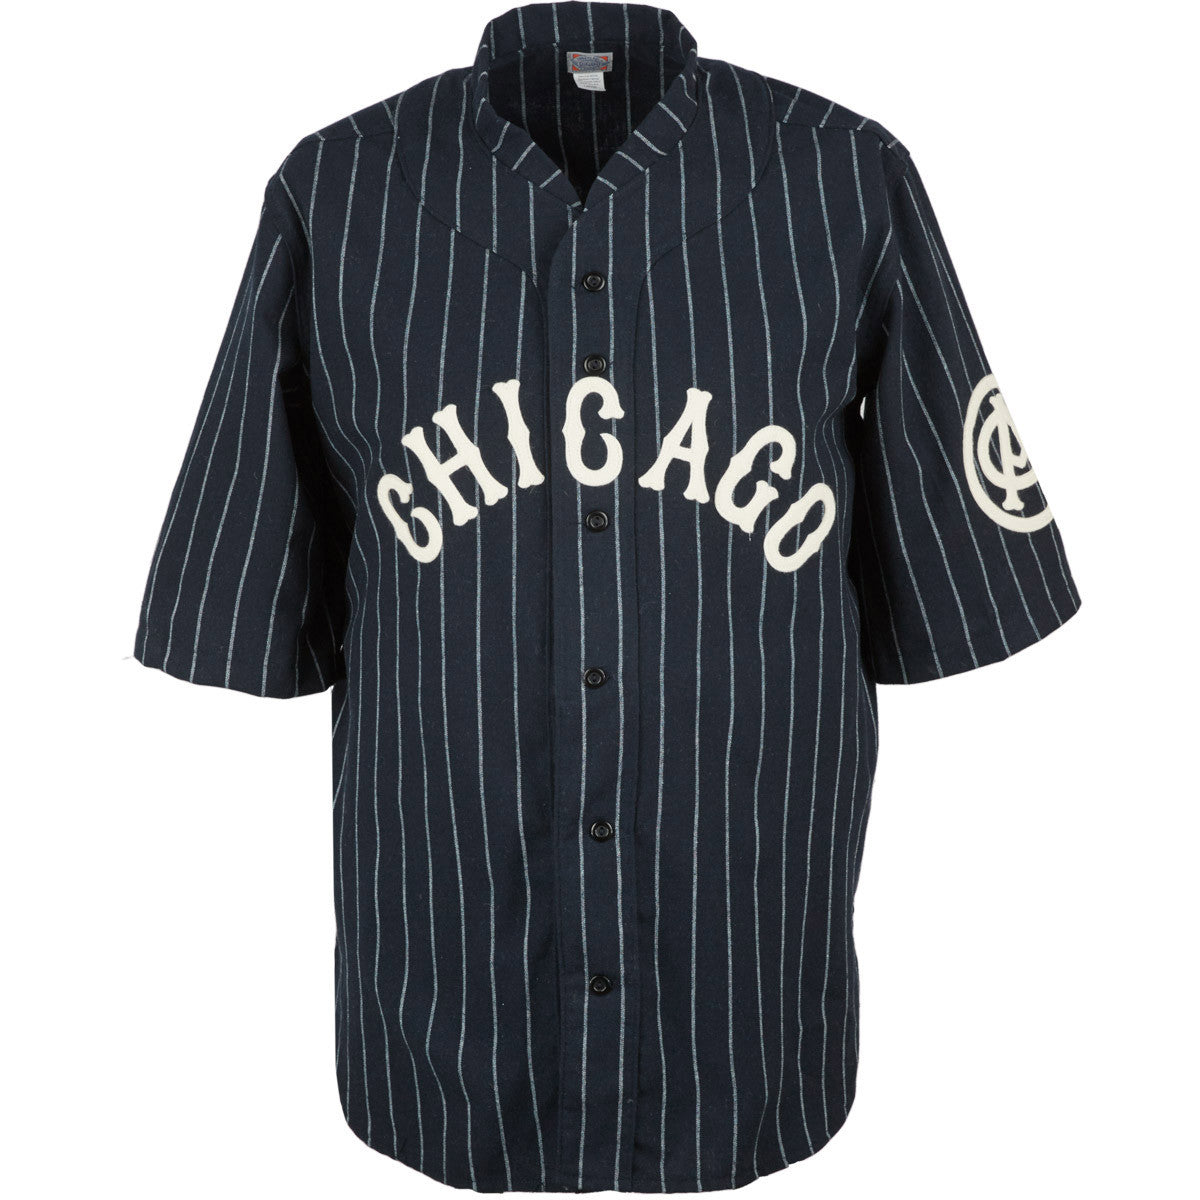 chicago zephyrs jersey